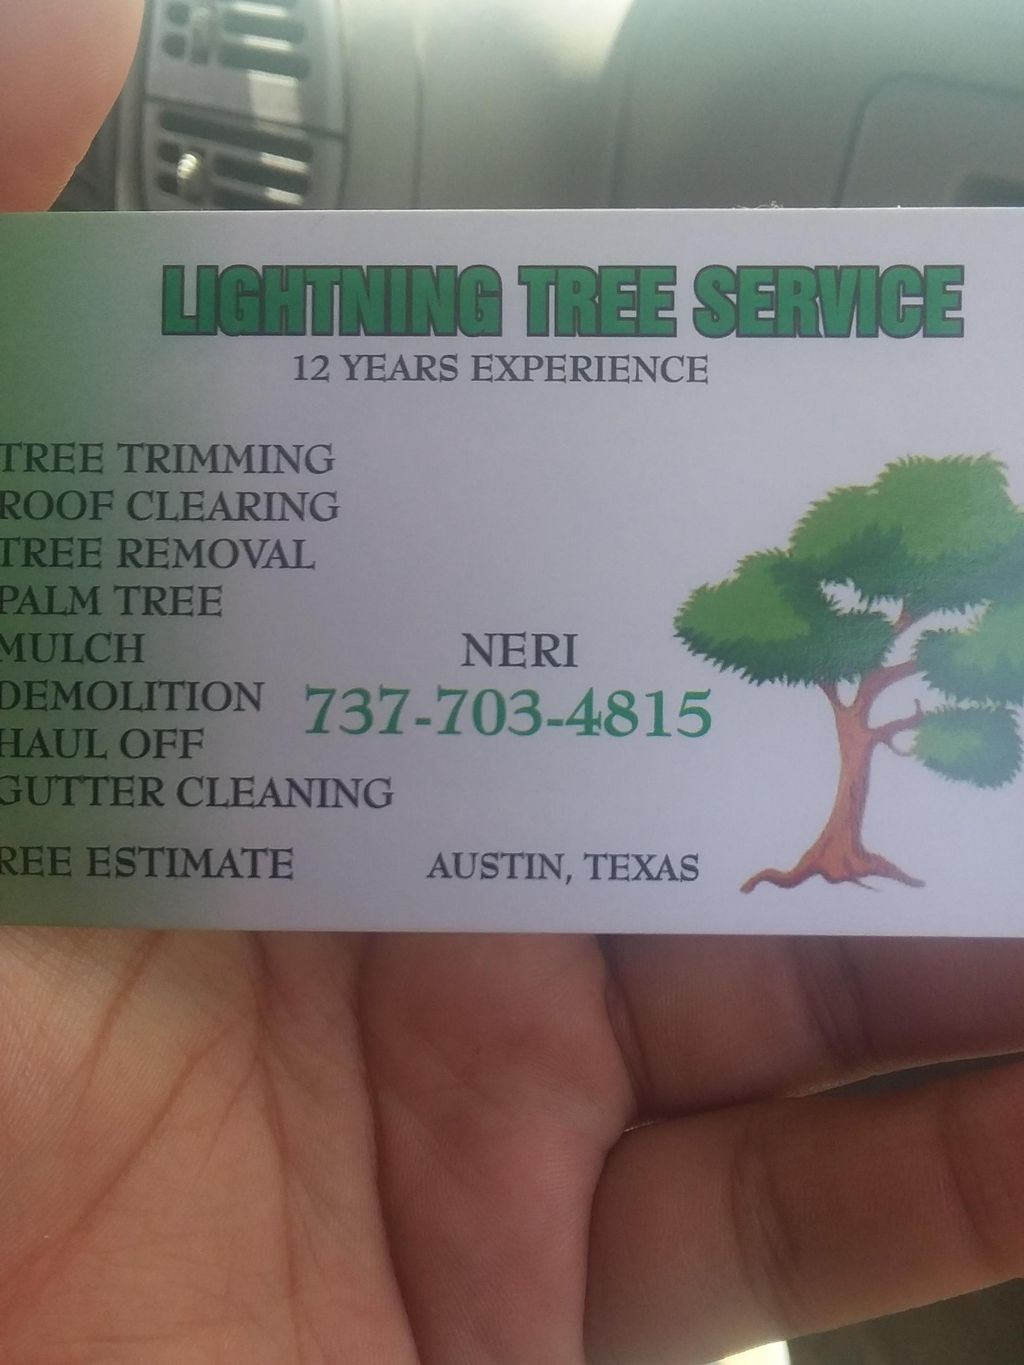 lightning tree service